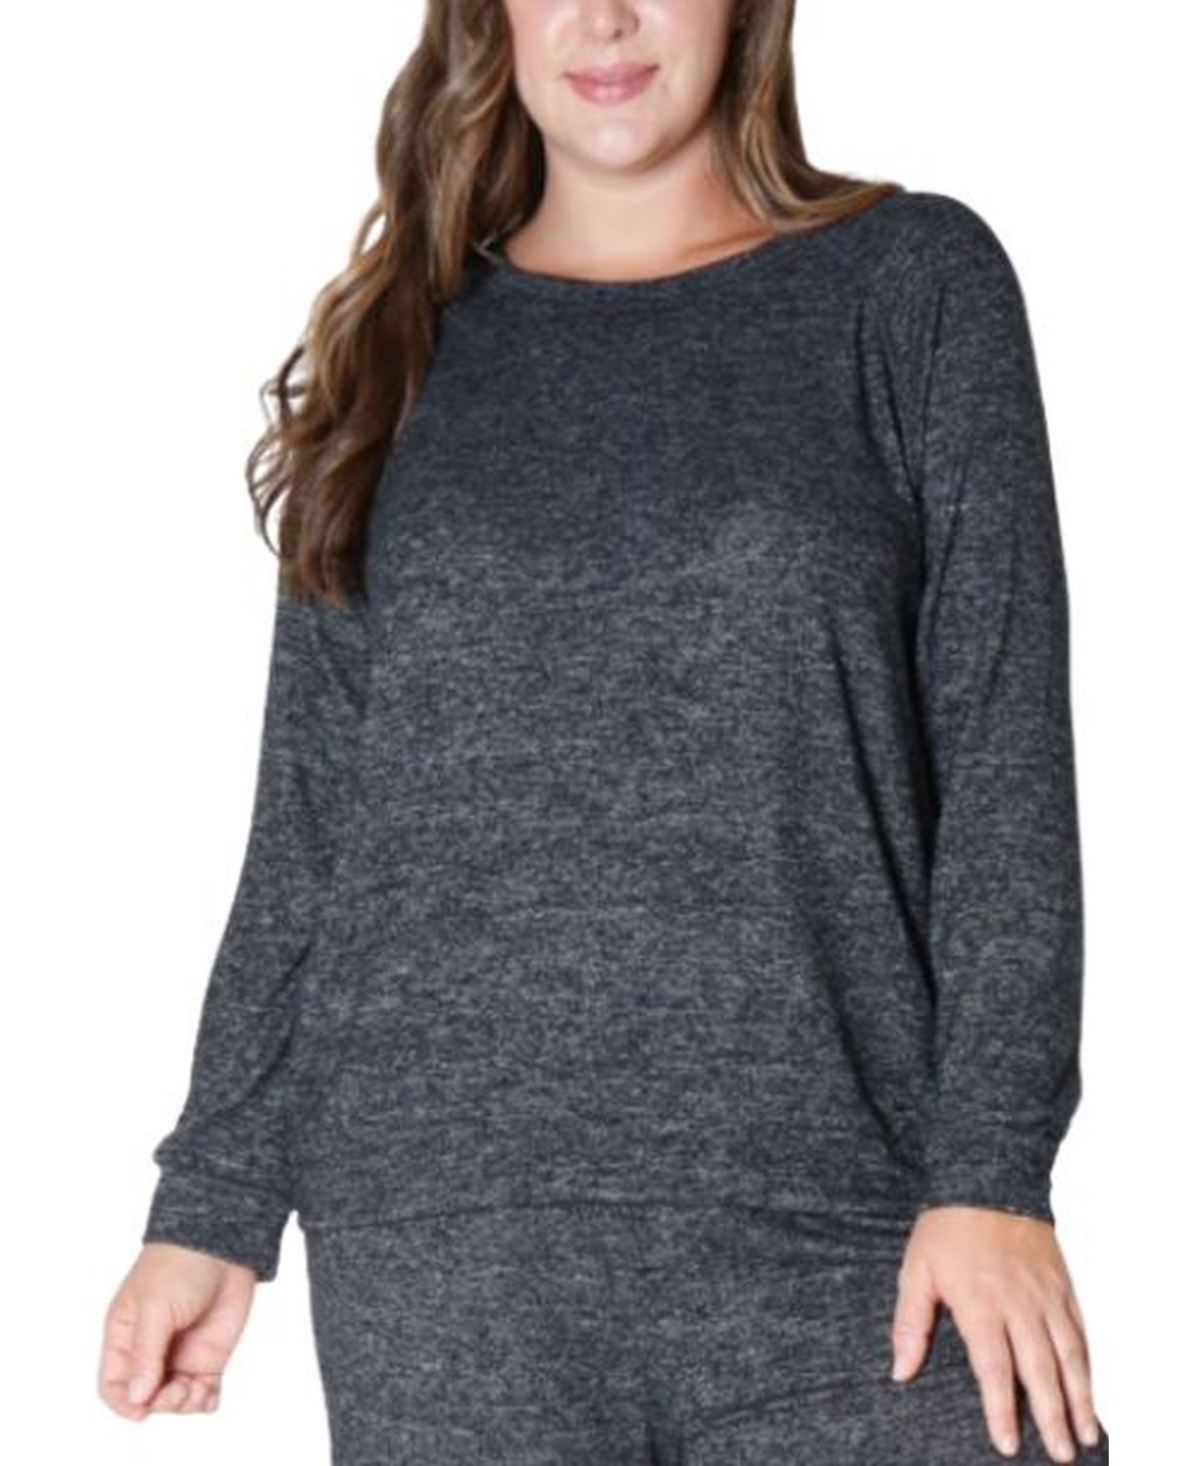  Coin 1804 Women's Plus Size Cozy Raglan Sweatshirt